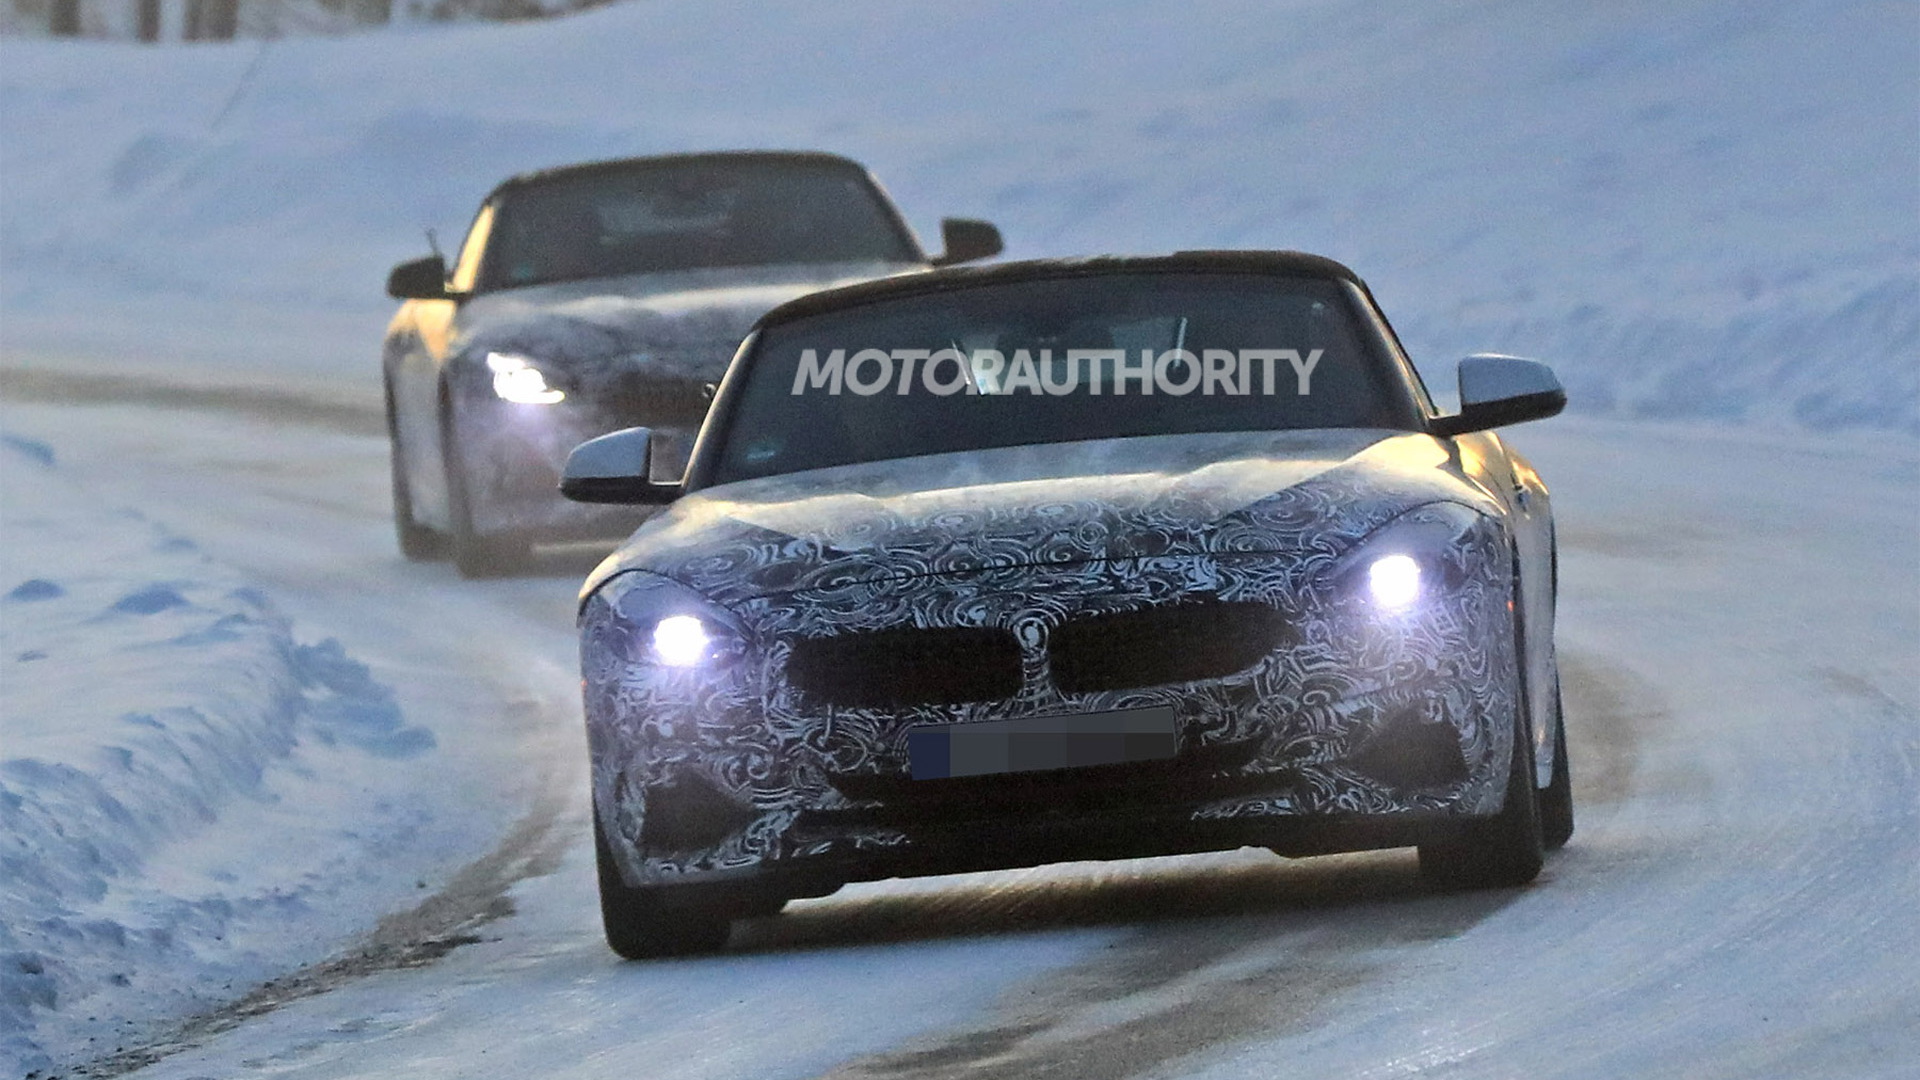 2019 BMW Z4 spy shots - Image via S. Baldauf/SB-Medien